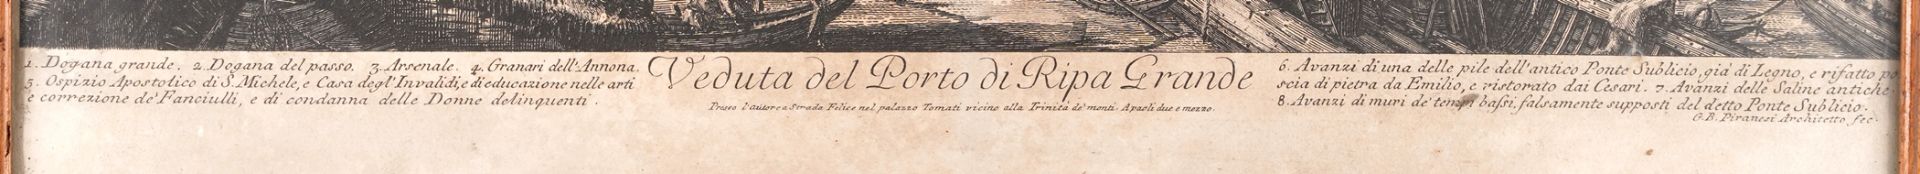 Piranesi, Giovanni Battista - Image 3 of 4